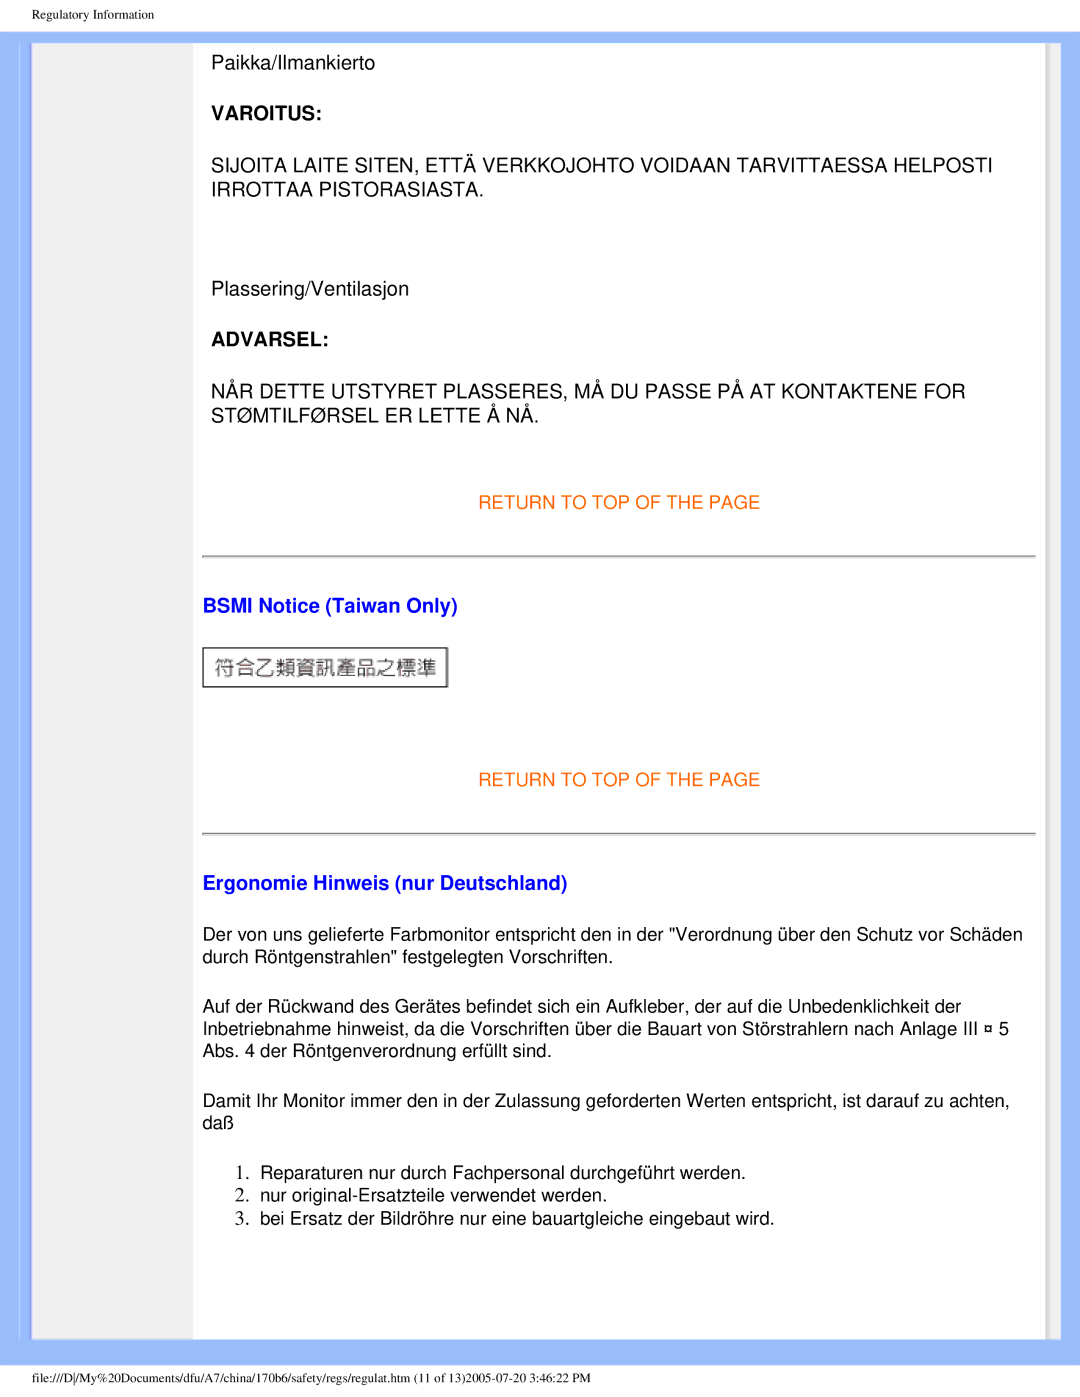 Philips 170B6 user manual Bsmi Notice Taiwan Only, Ergonomie Hinweis nur Deutschland 